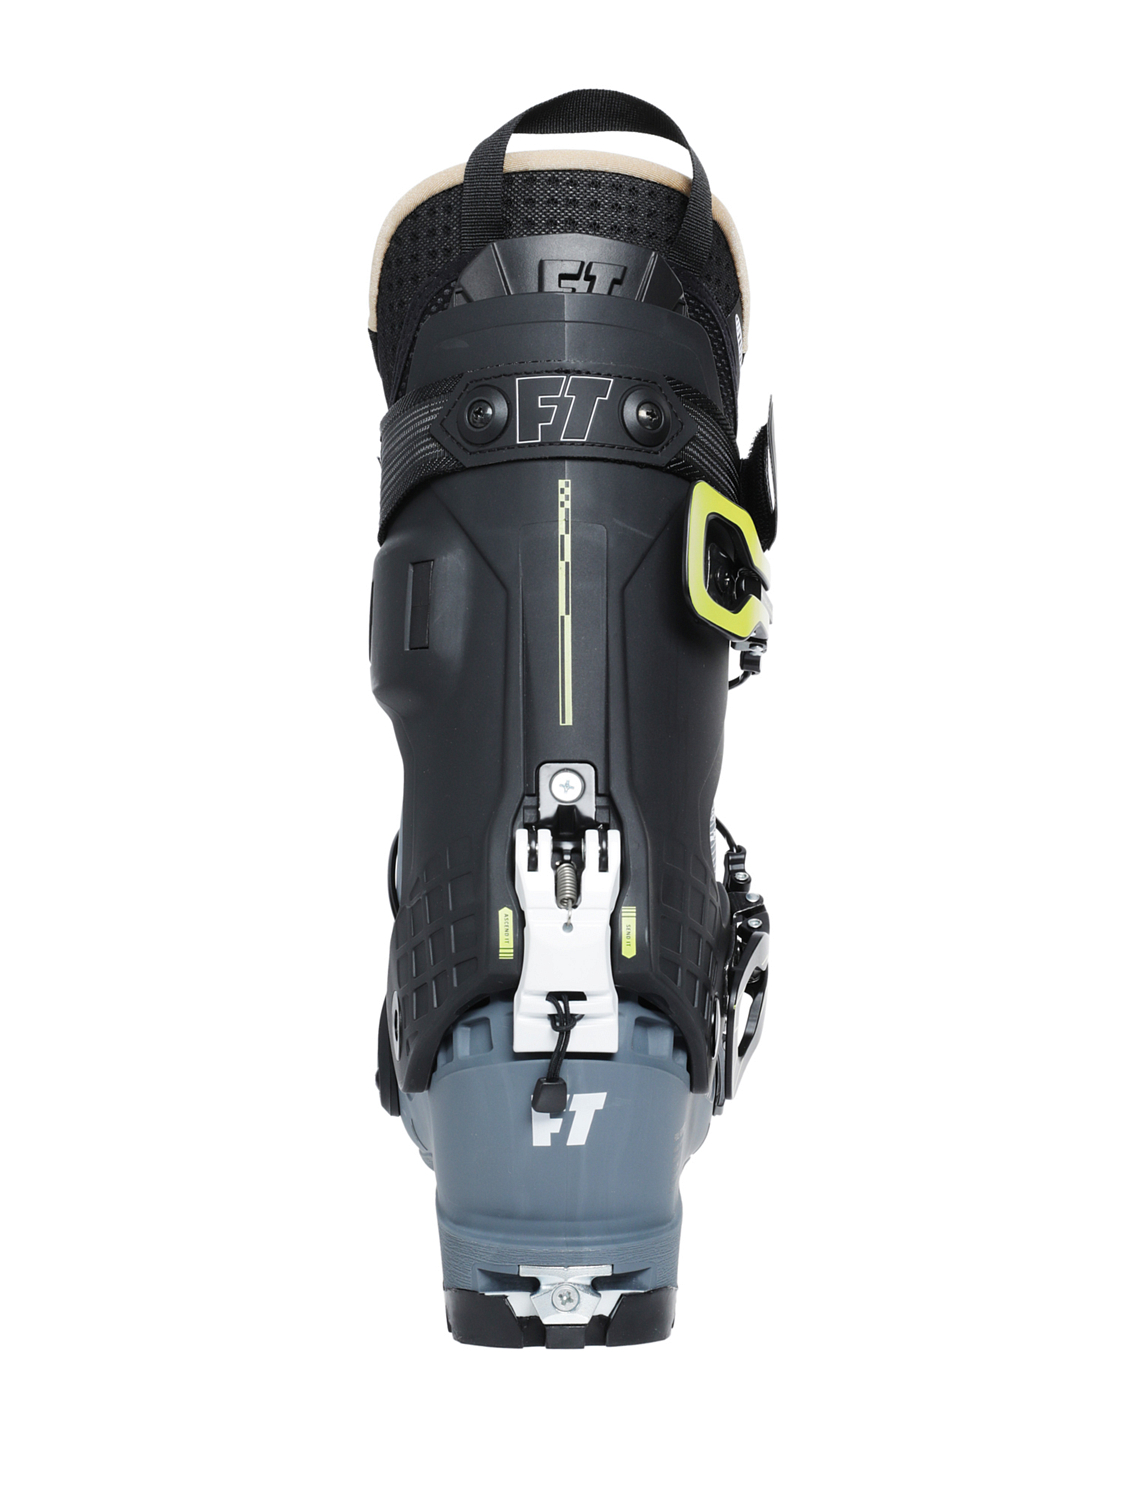 Горнолыжные ботинки Full Tilt Ascendant Approach Michelin/Grip Walk Multicolor